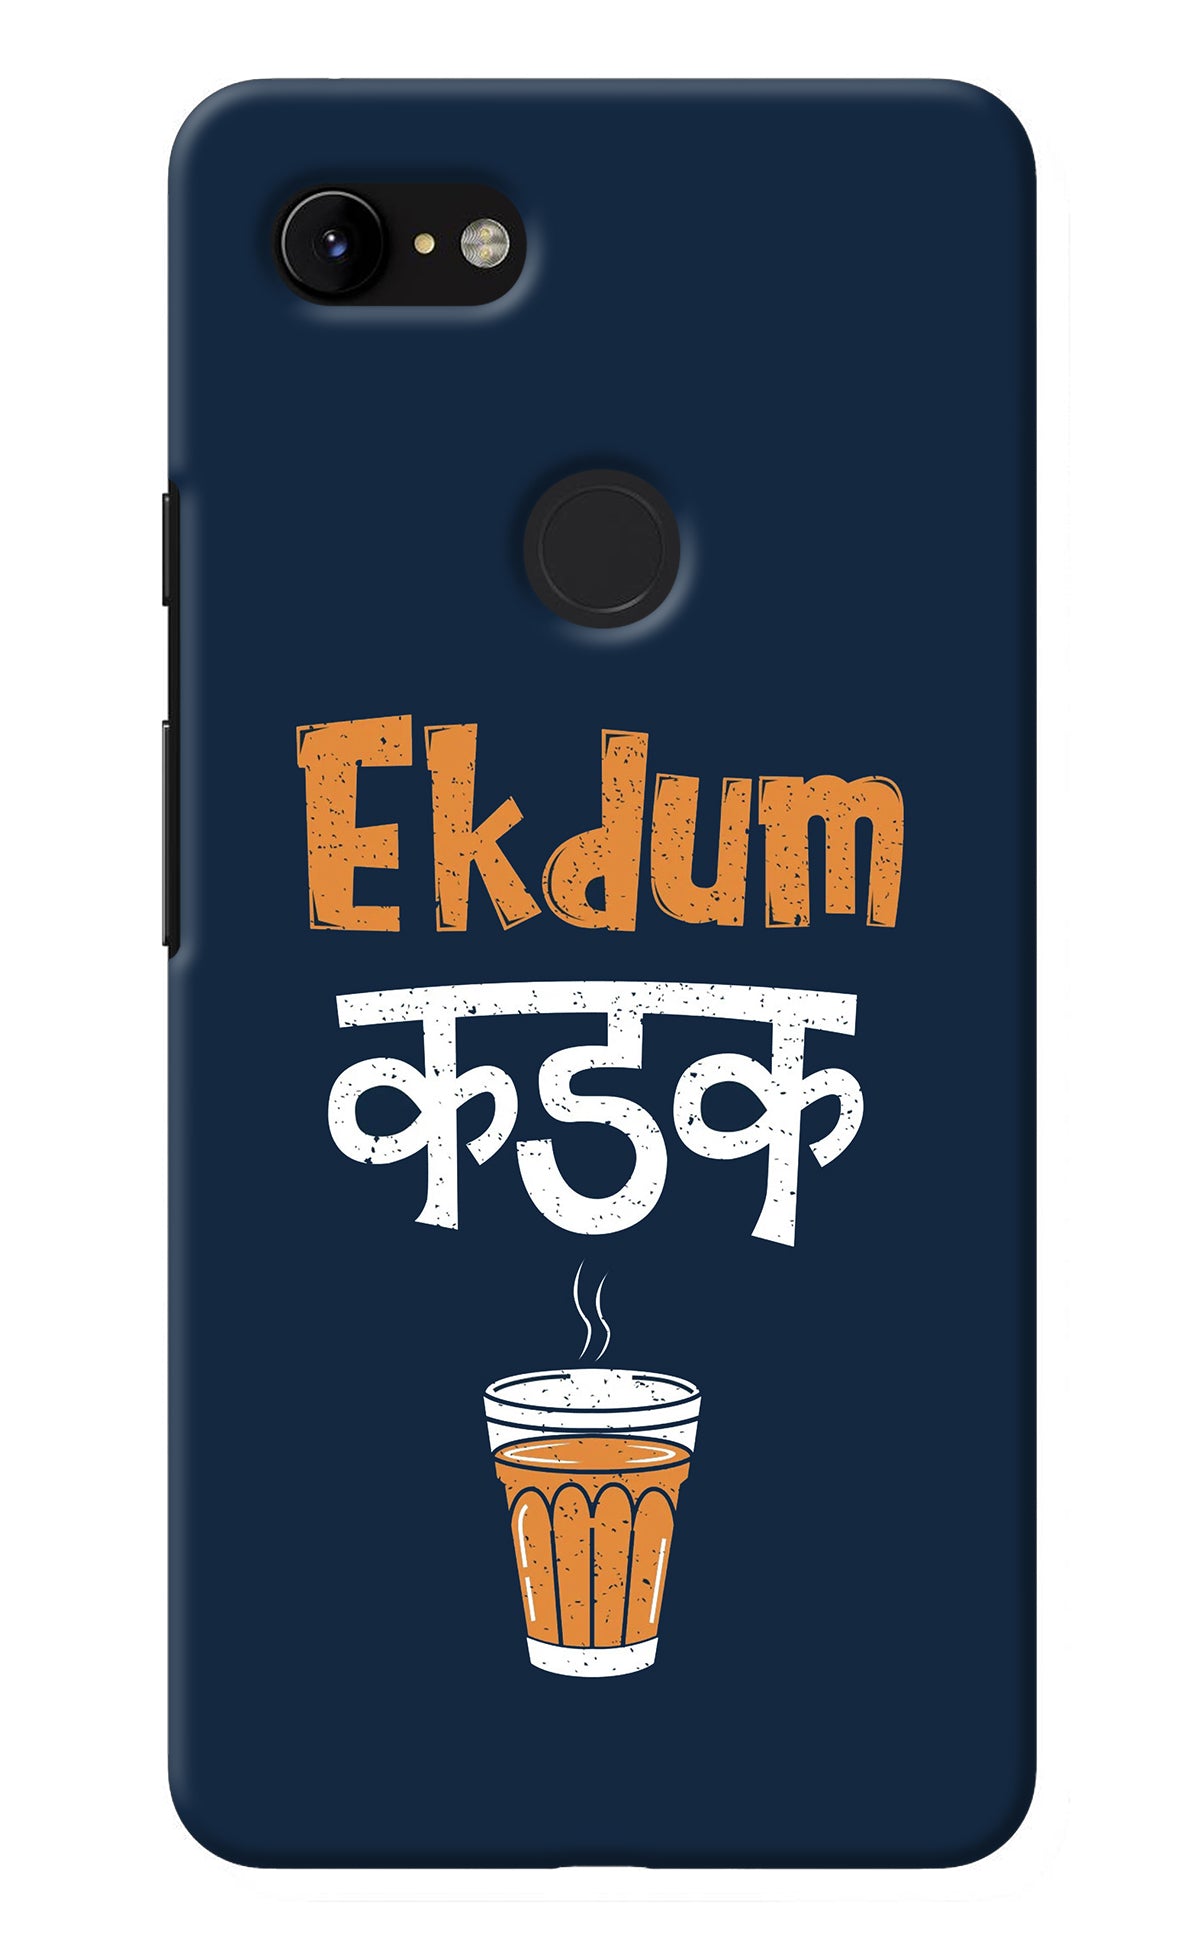 Ekdum Kadak Chai Google Pixel 3 XL Back Cover